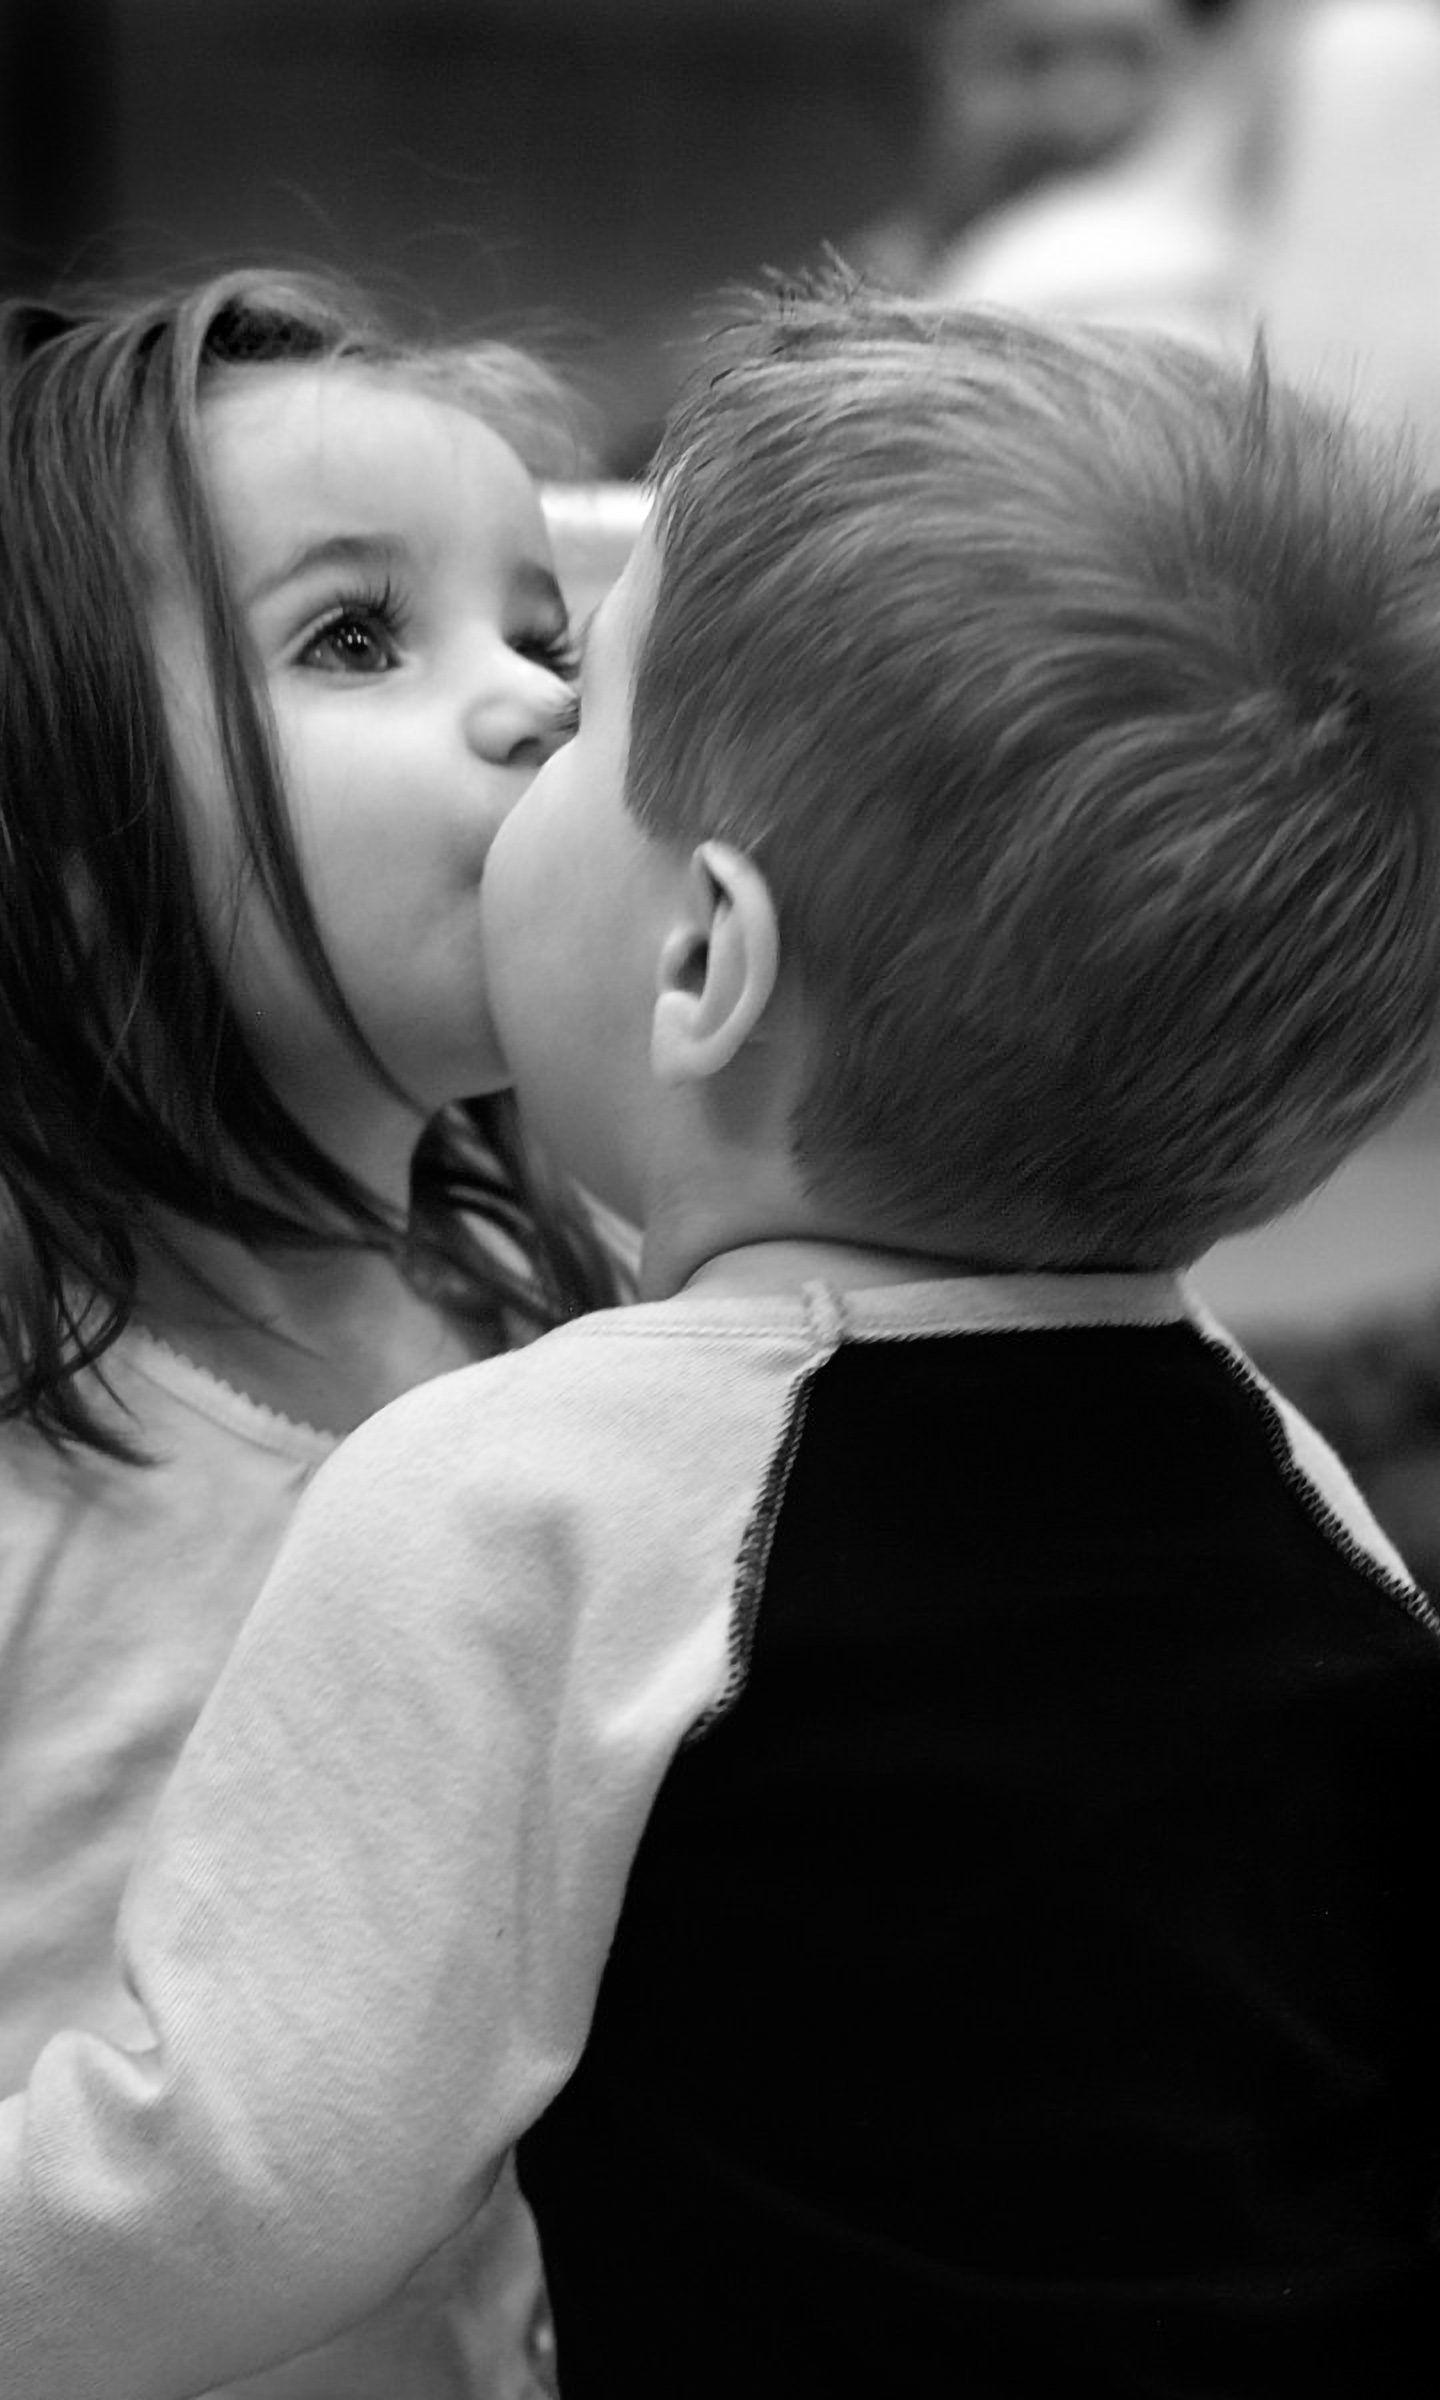 Cute Kids Kissing Monochrome Love 4K Wallpaper